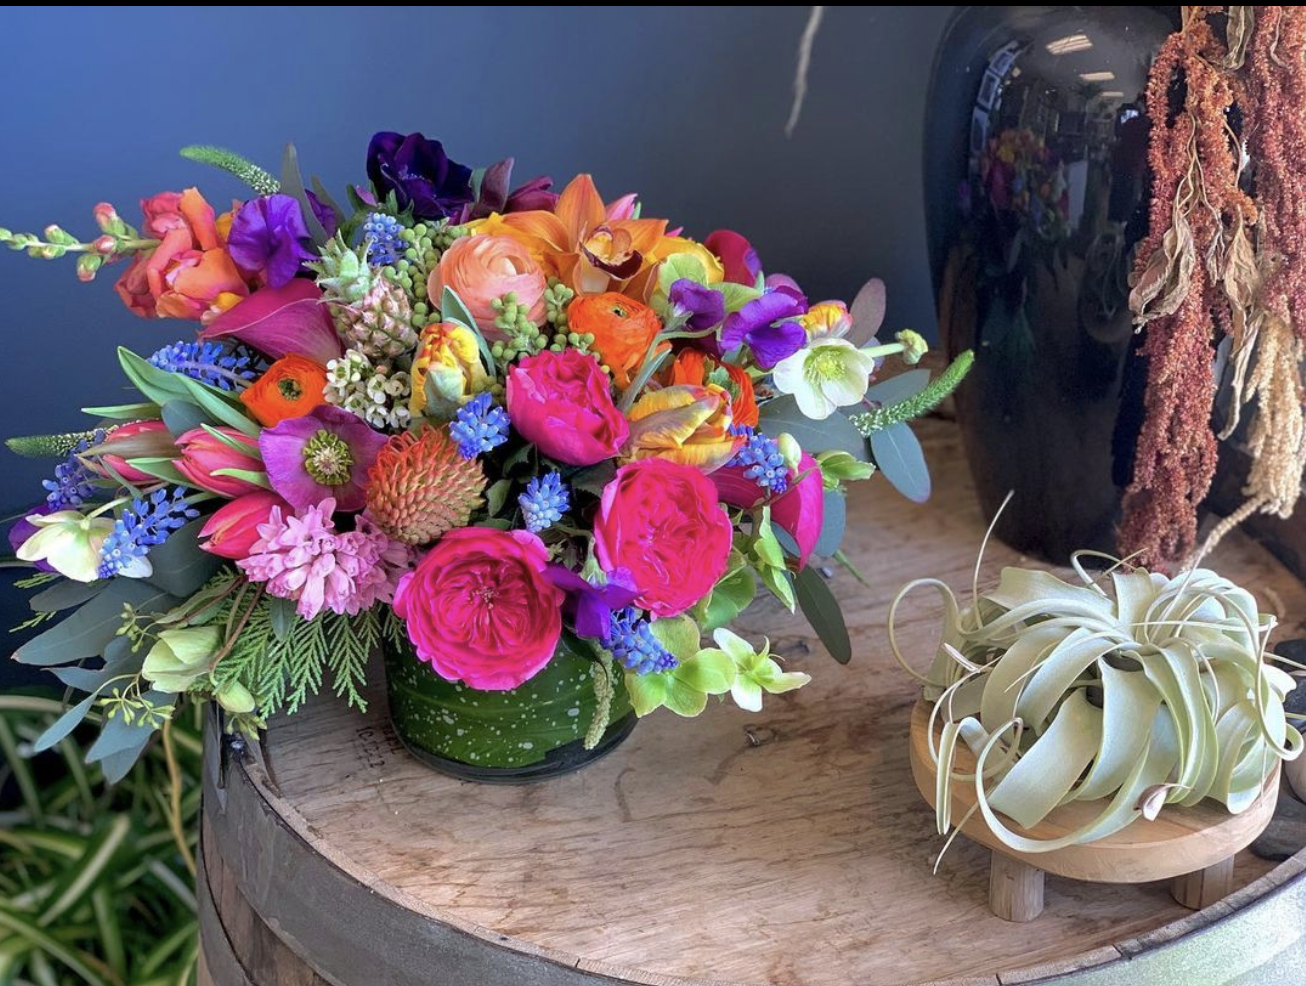 Another stunning arrangement from The Centerpiece Flower Shop in Boston